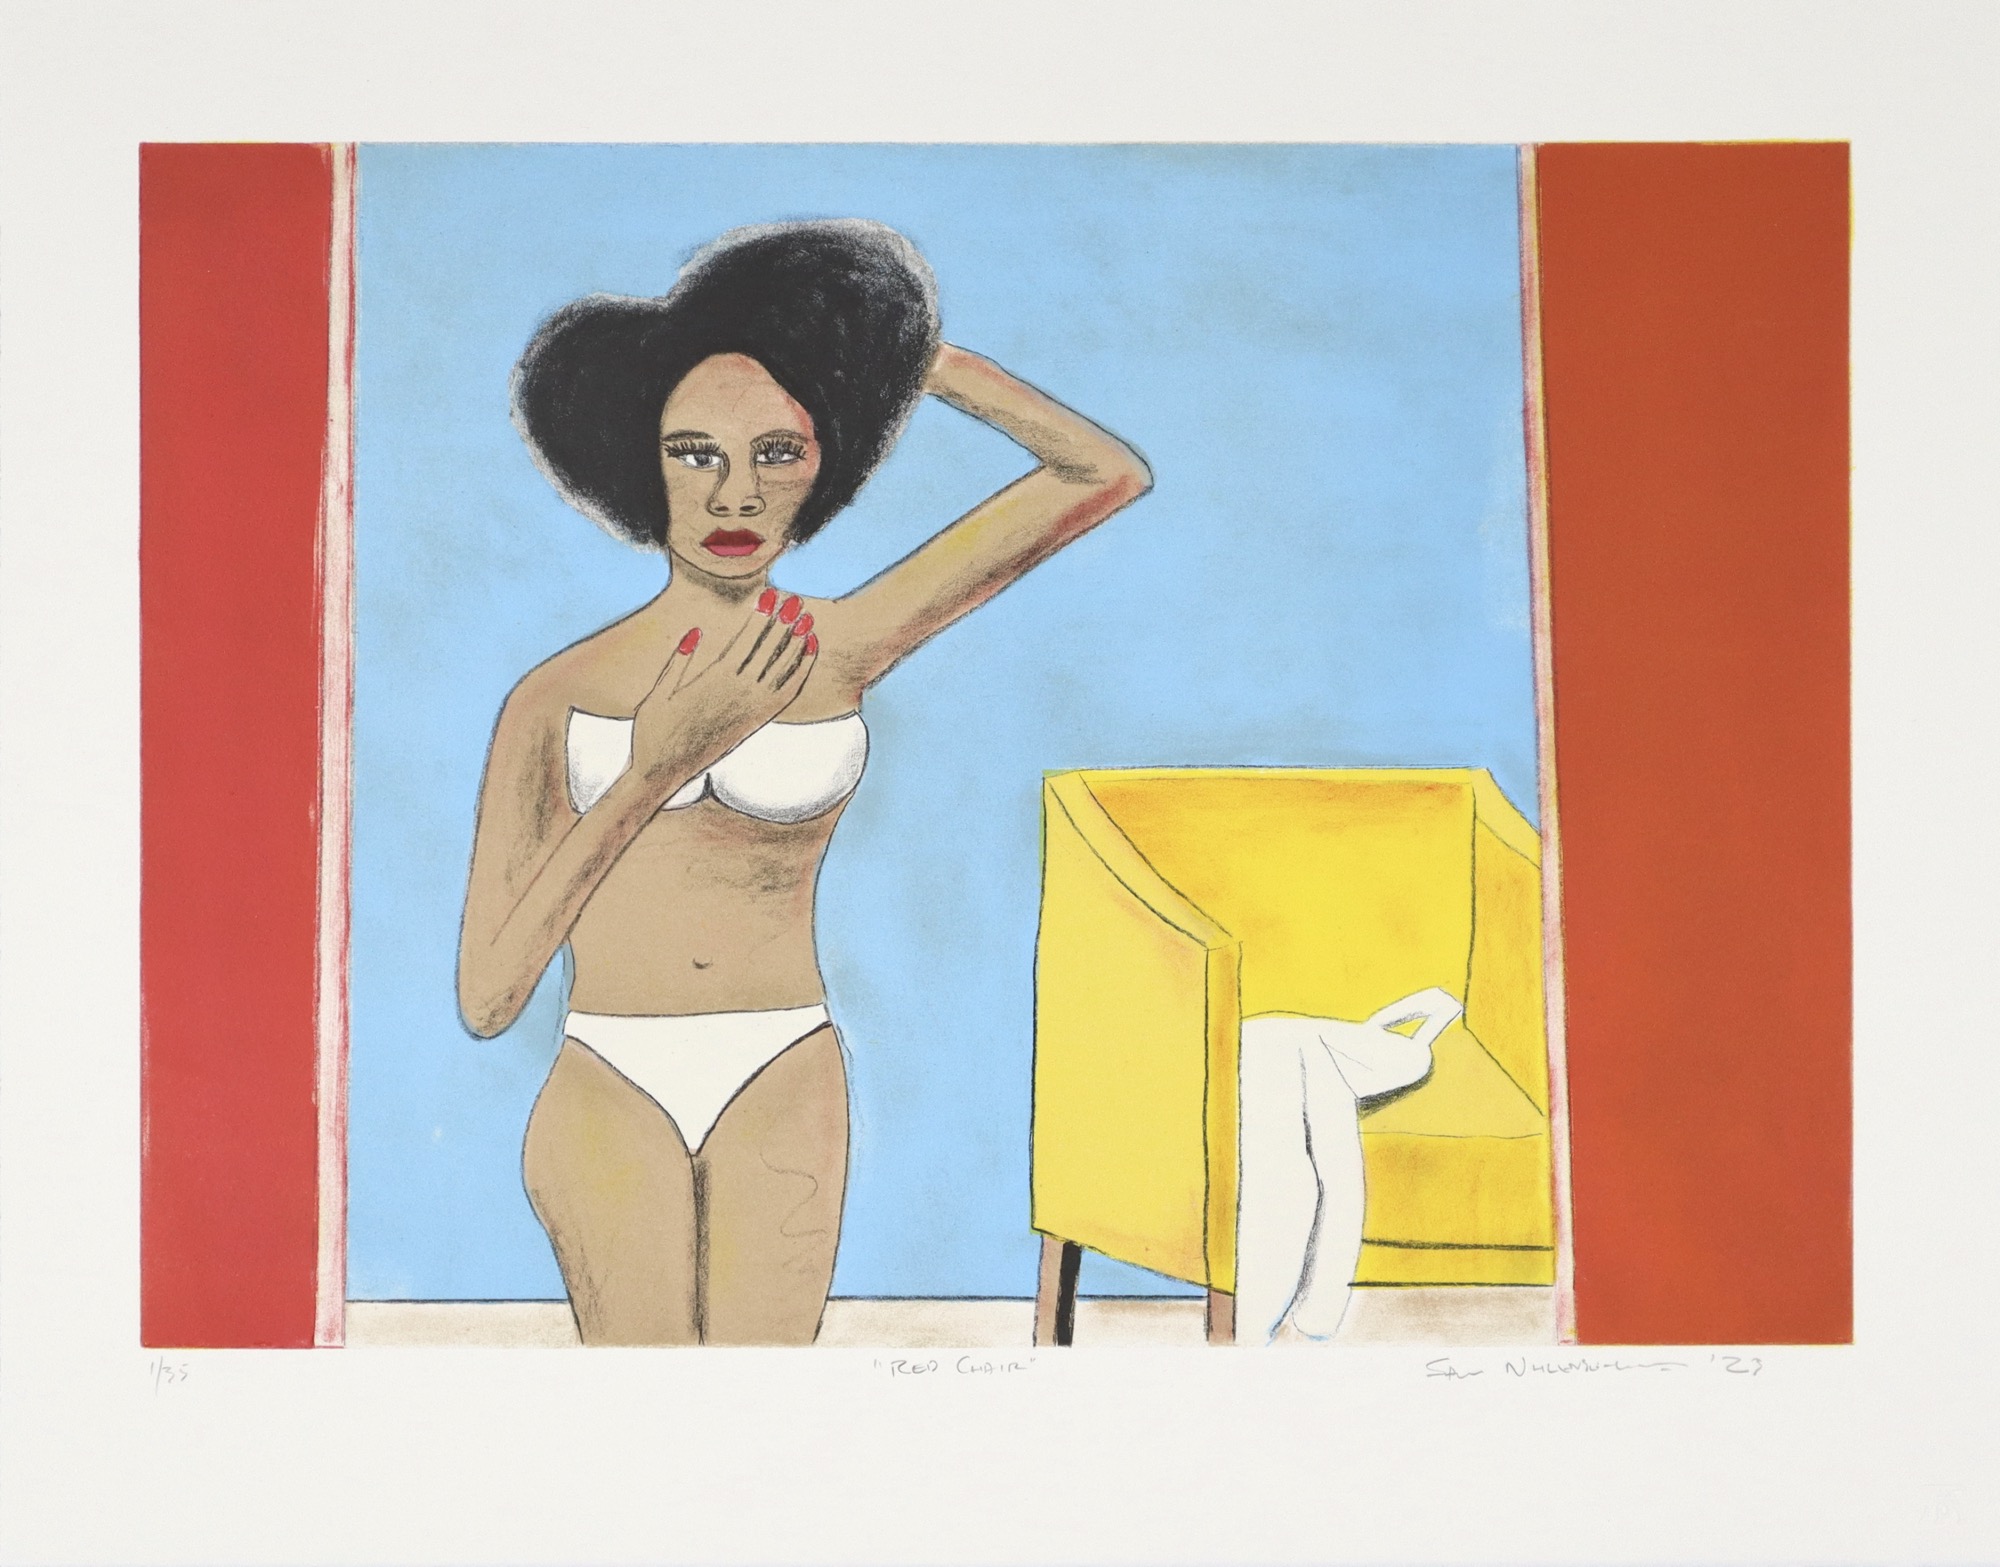 Colour lithorgaph by Sam Nhlengethwa of woman in underwear facing viewer